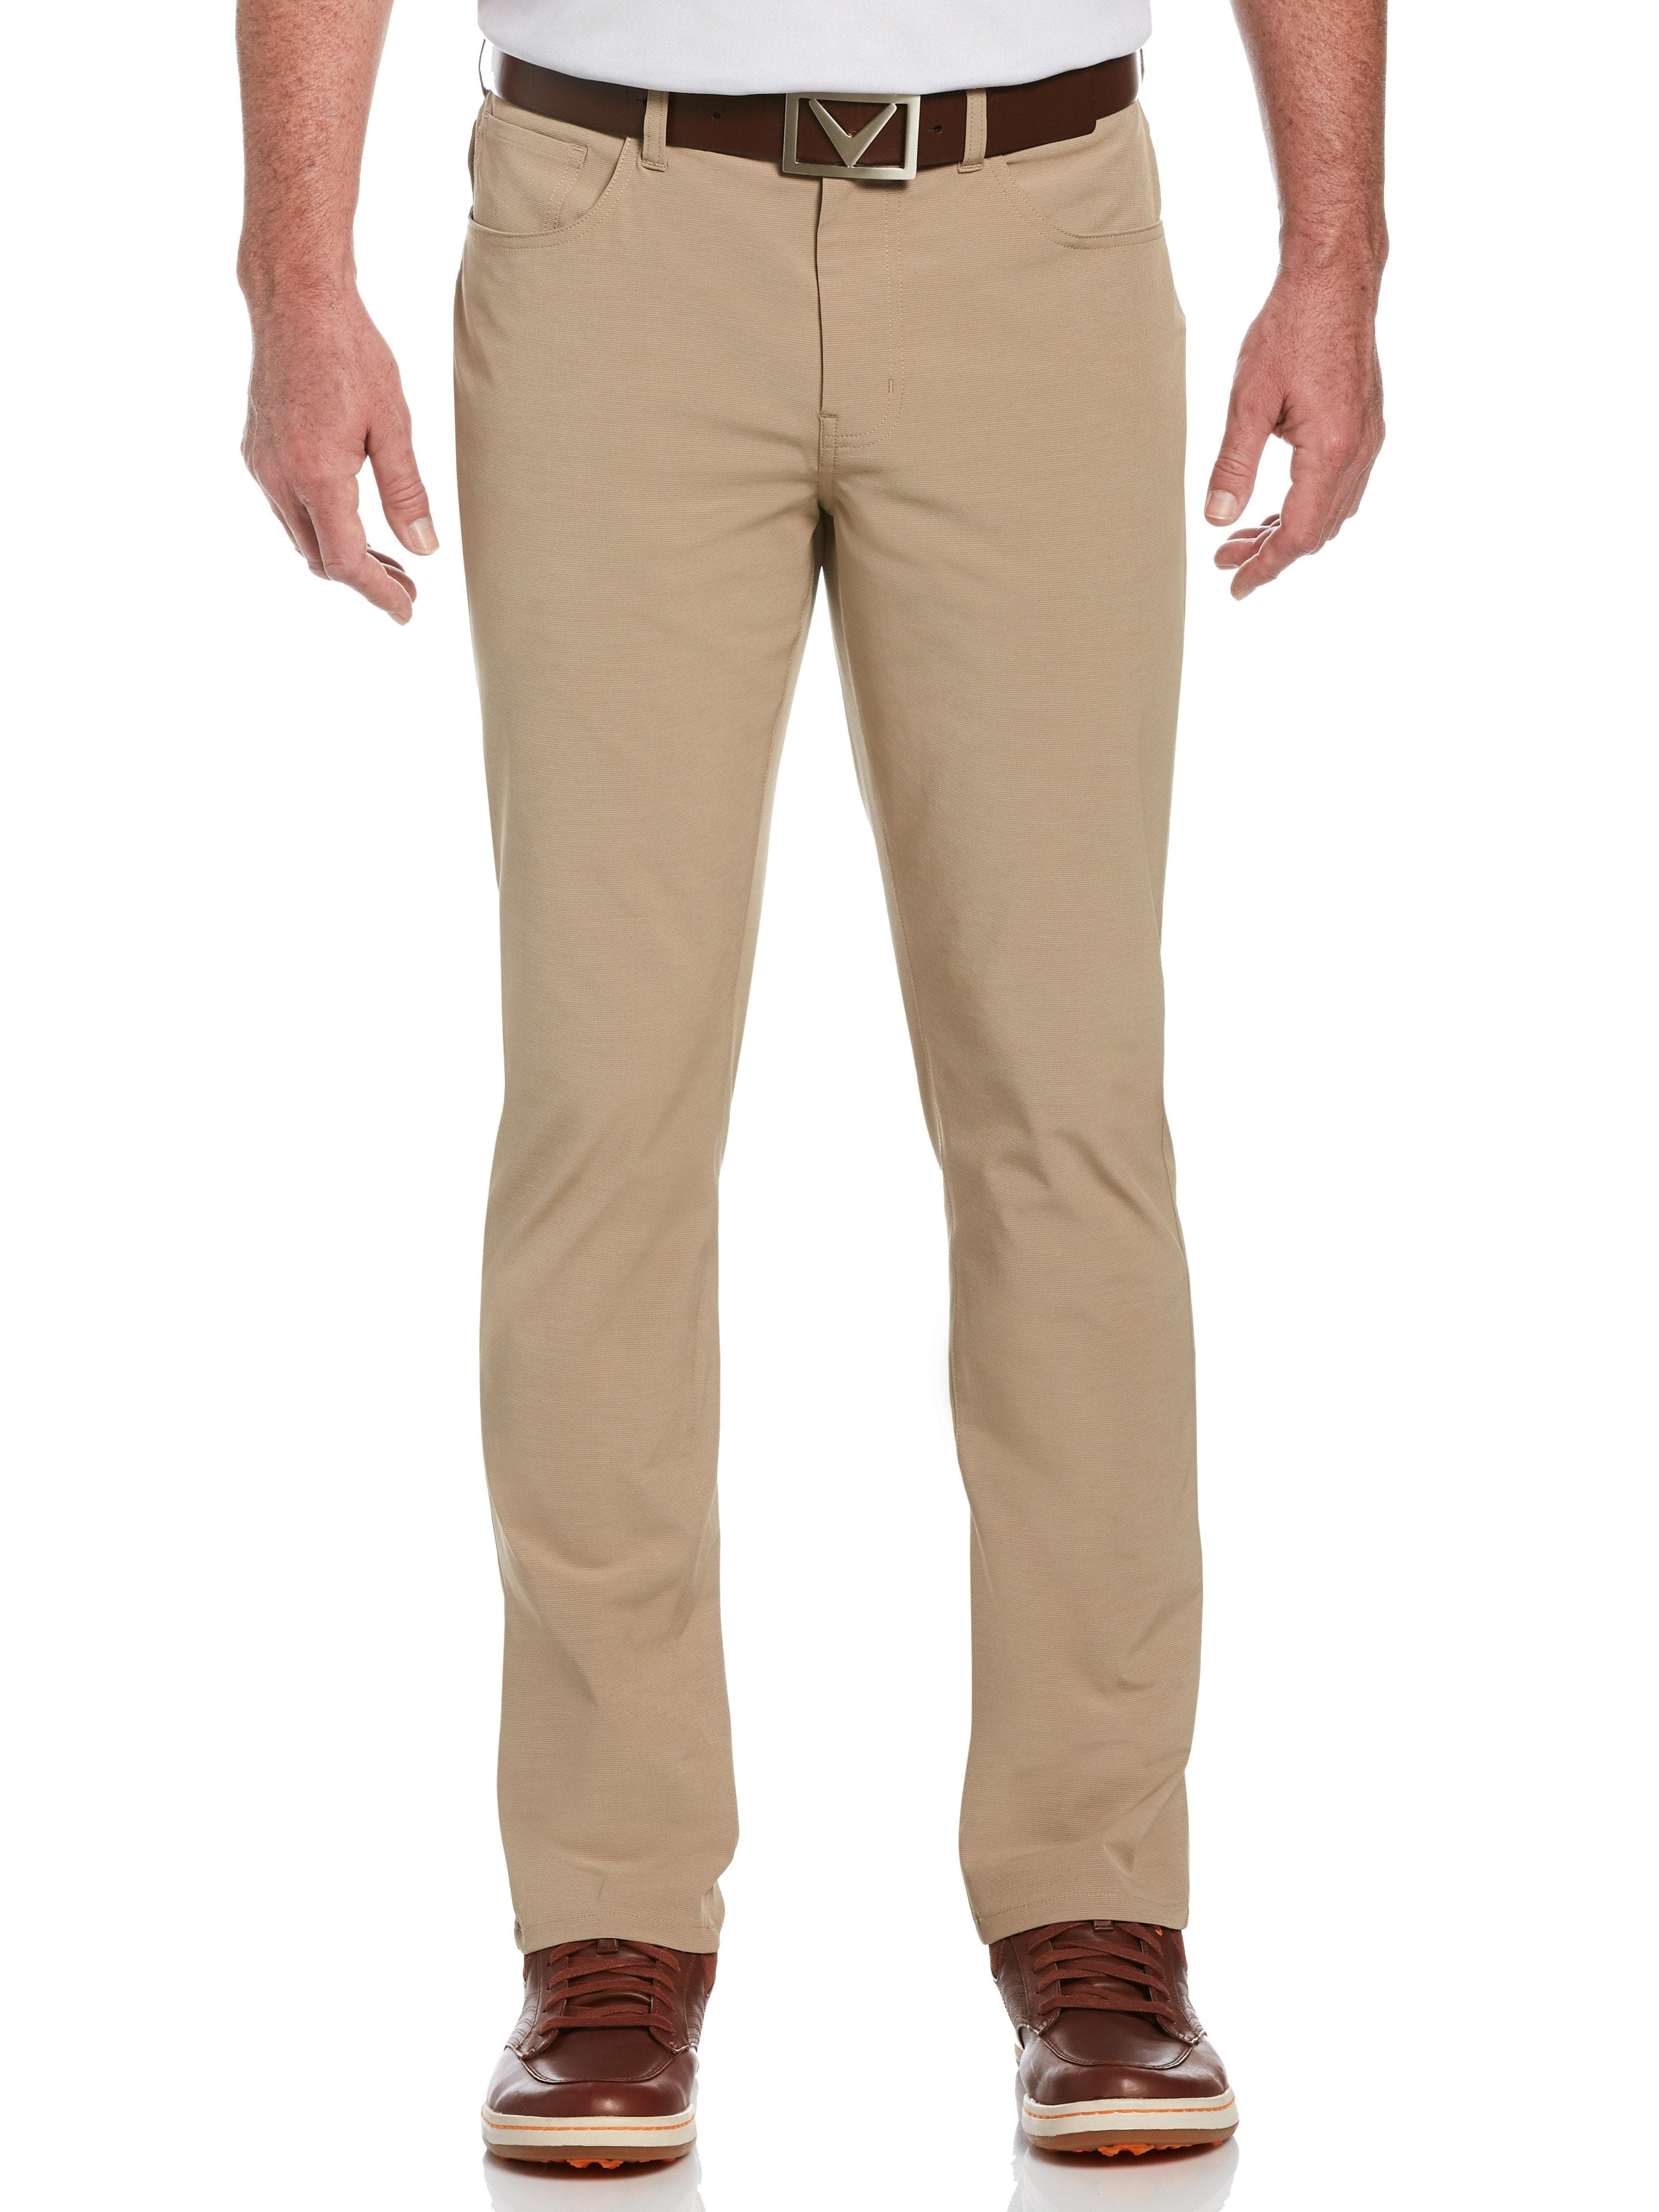 Stretch Waterproof 5-pocket Thick Travel Pants, Golf Pants, Work Pants